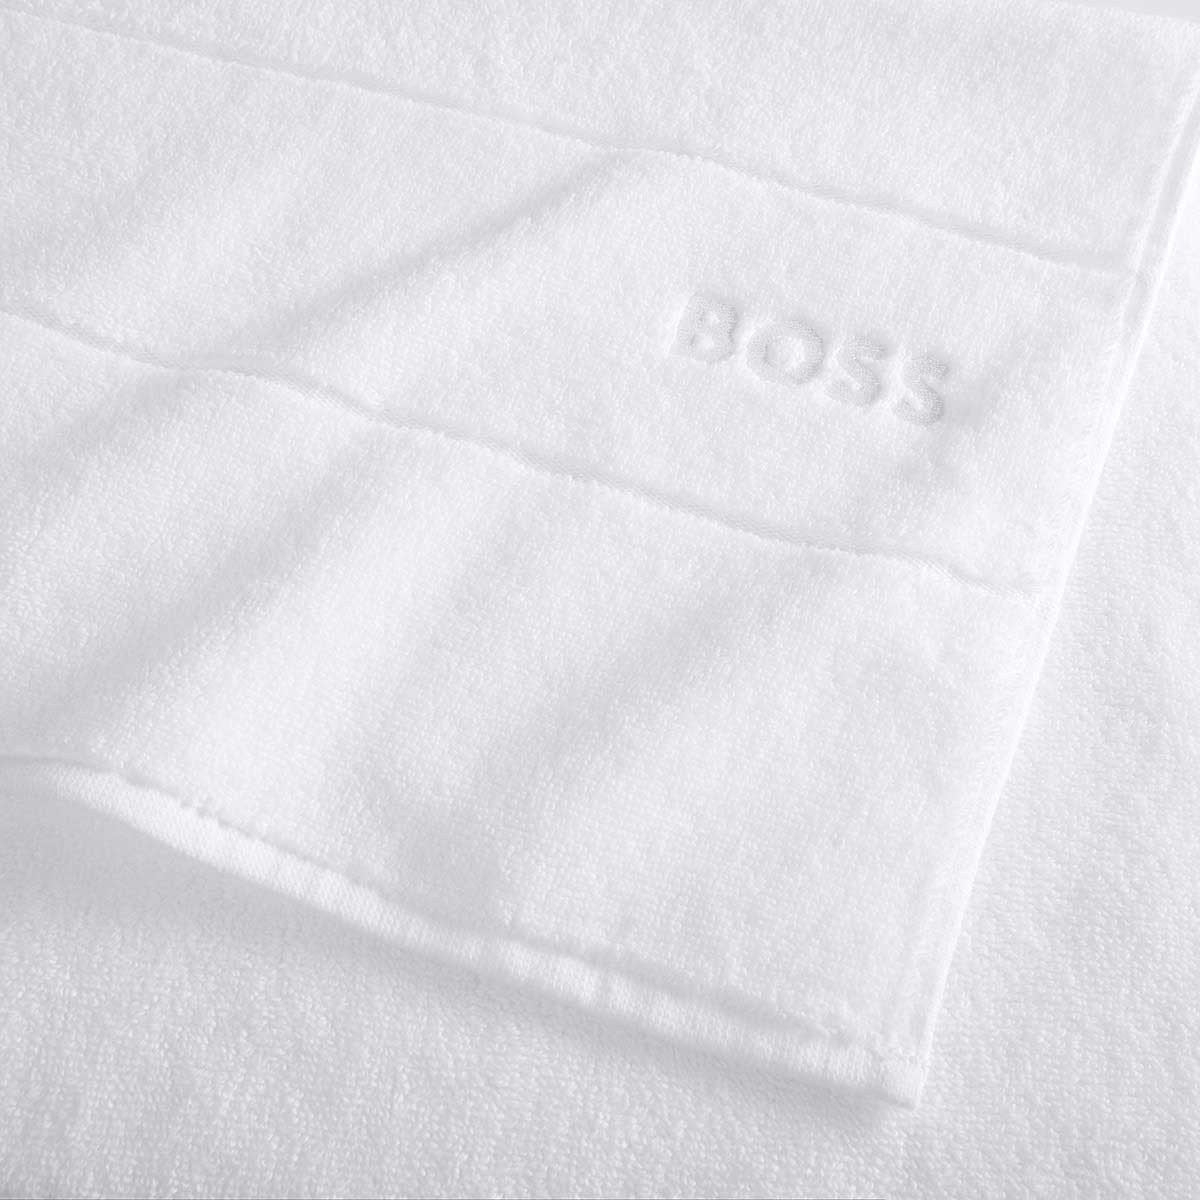 2 Piece 100% Cotton Bath Sheet Hugo Boss Color: Limelight